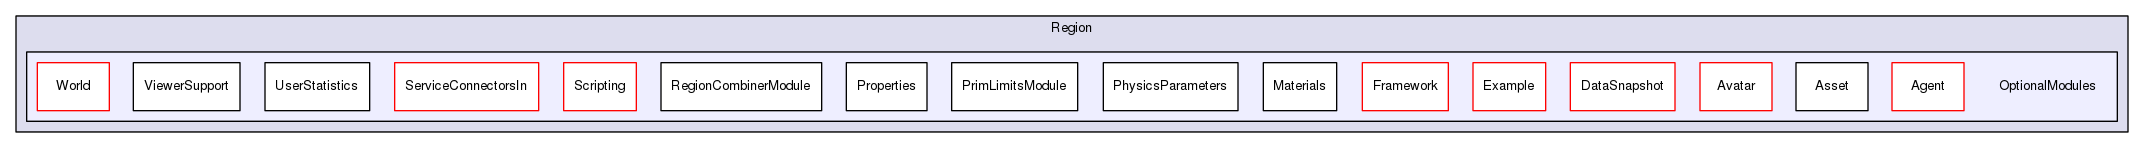 Region/OptionalModules